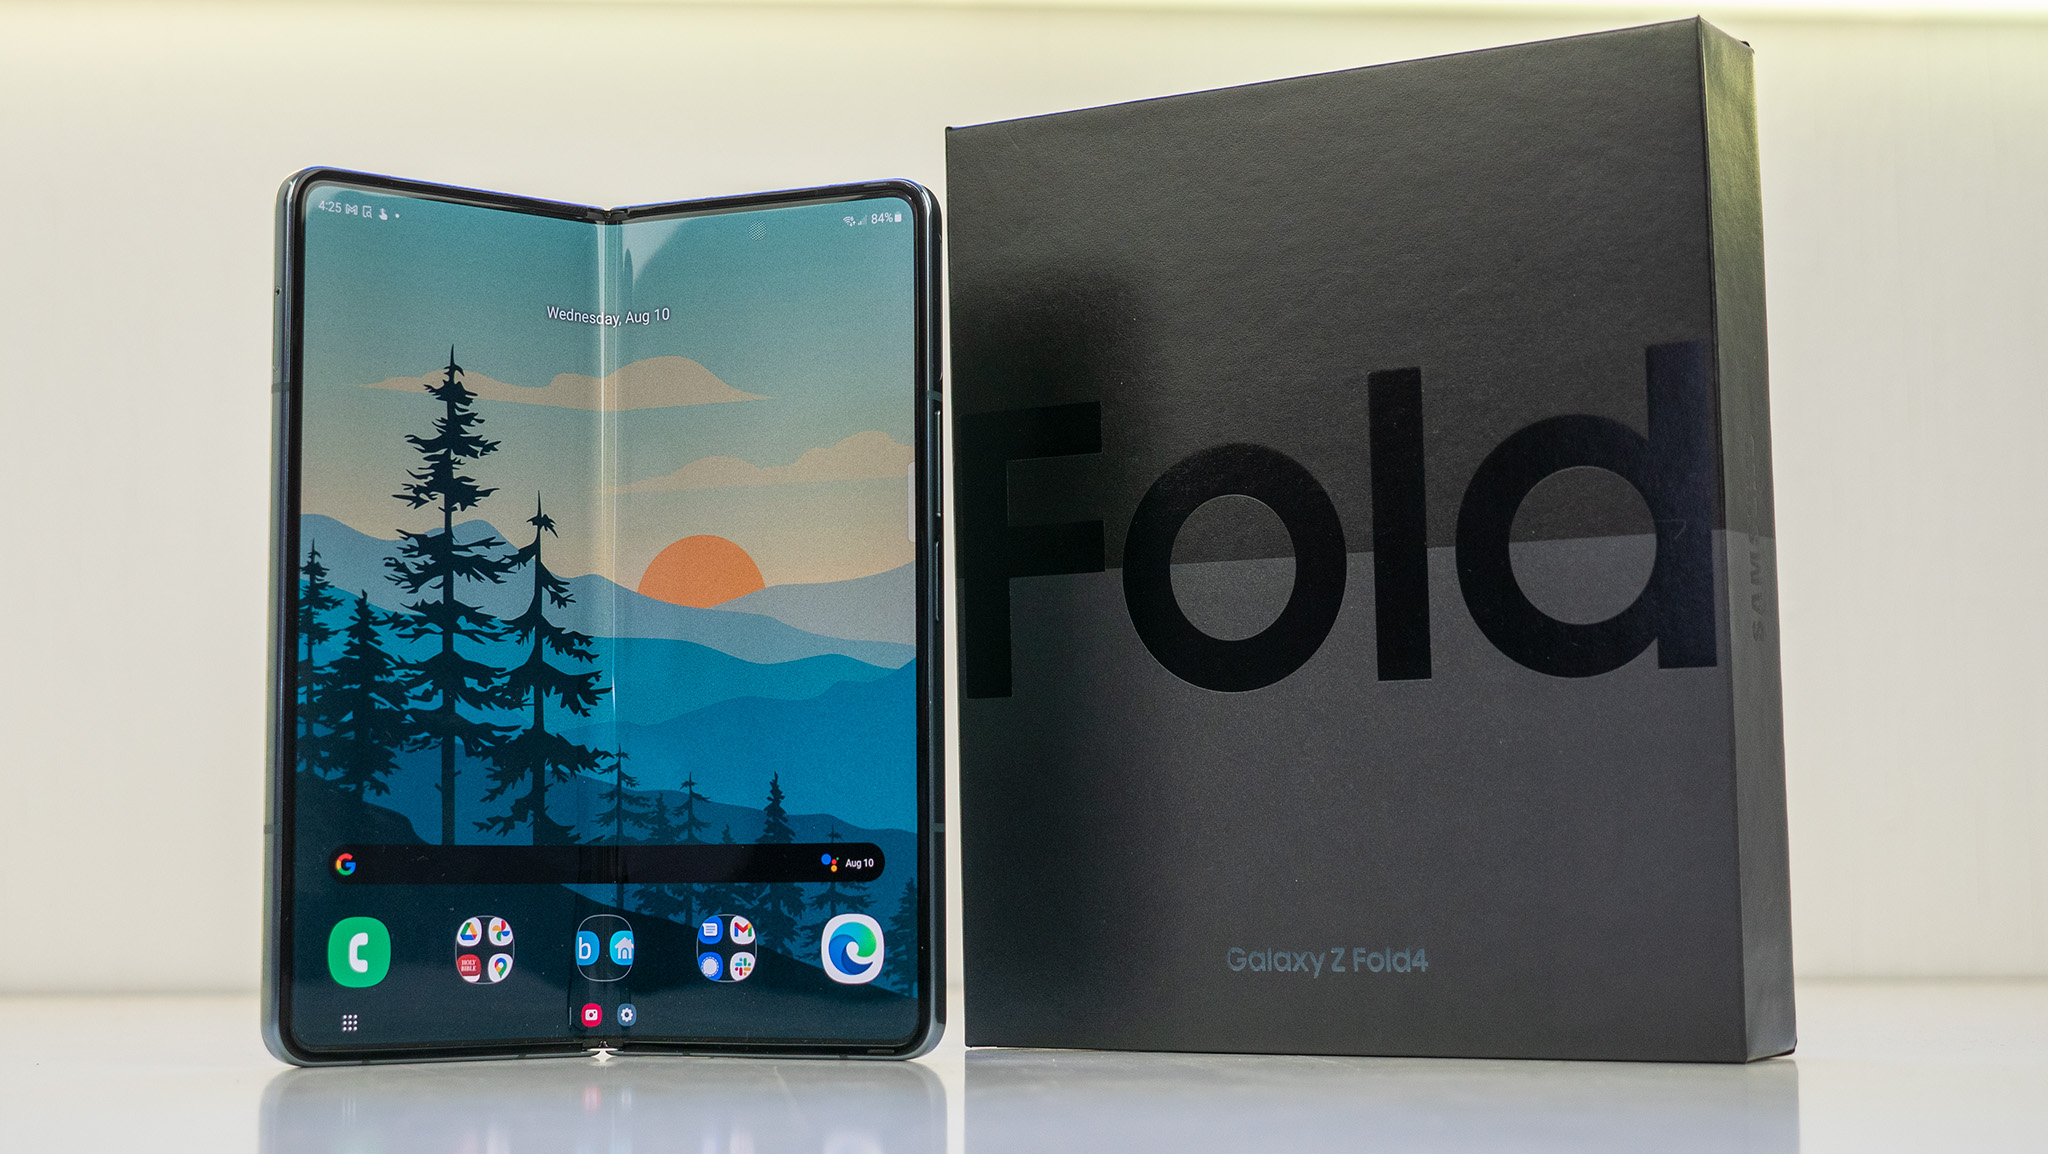 Samsung Galaxy Z Fold 4 in Graygreen next to the retail box